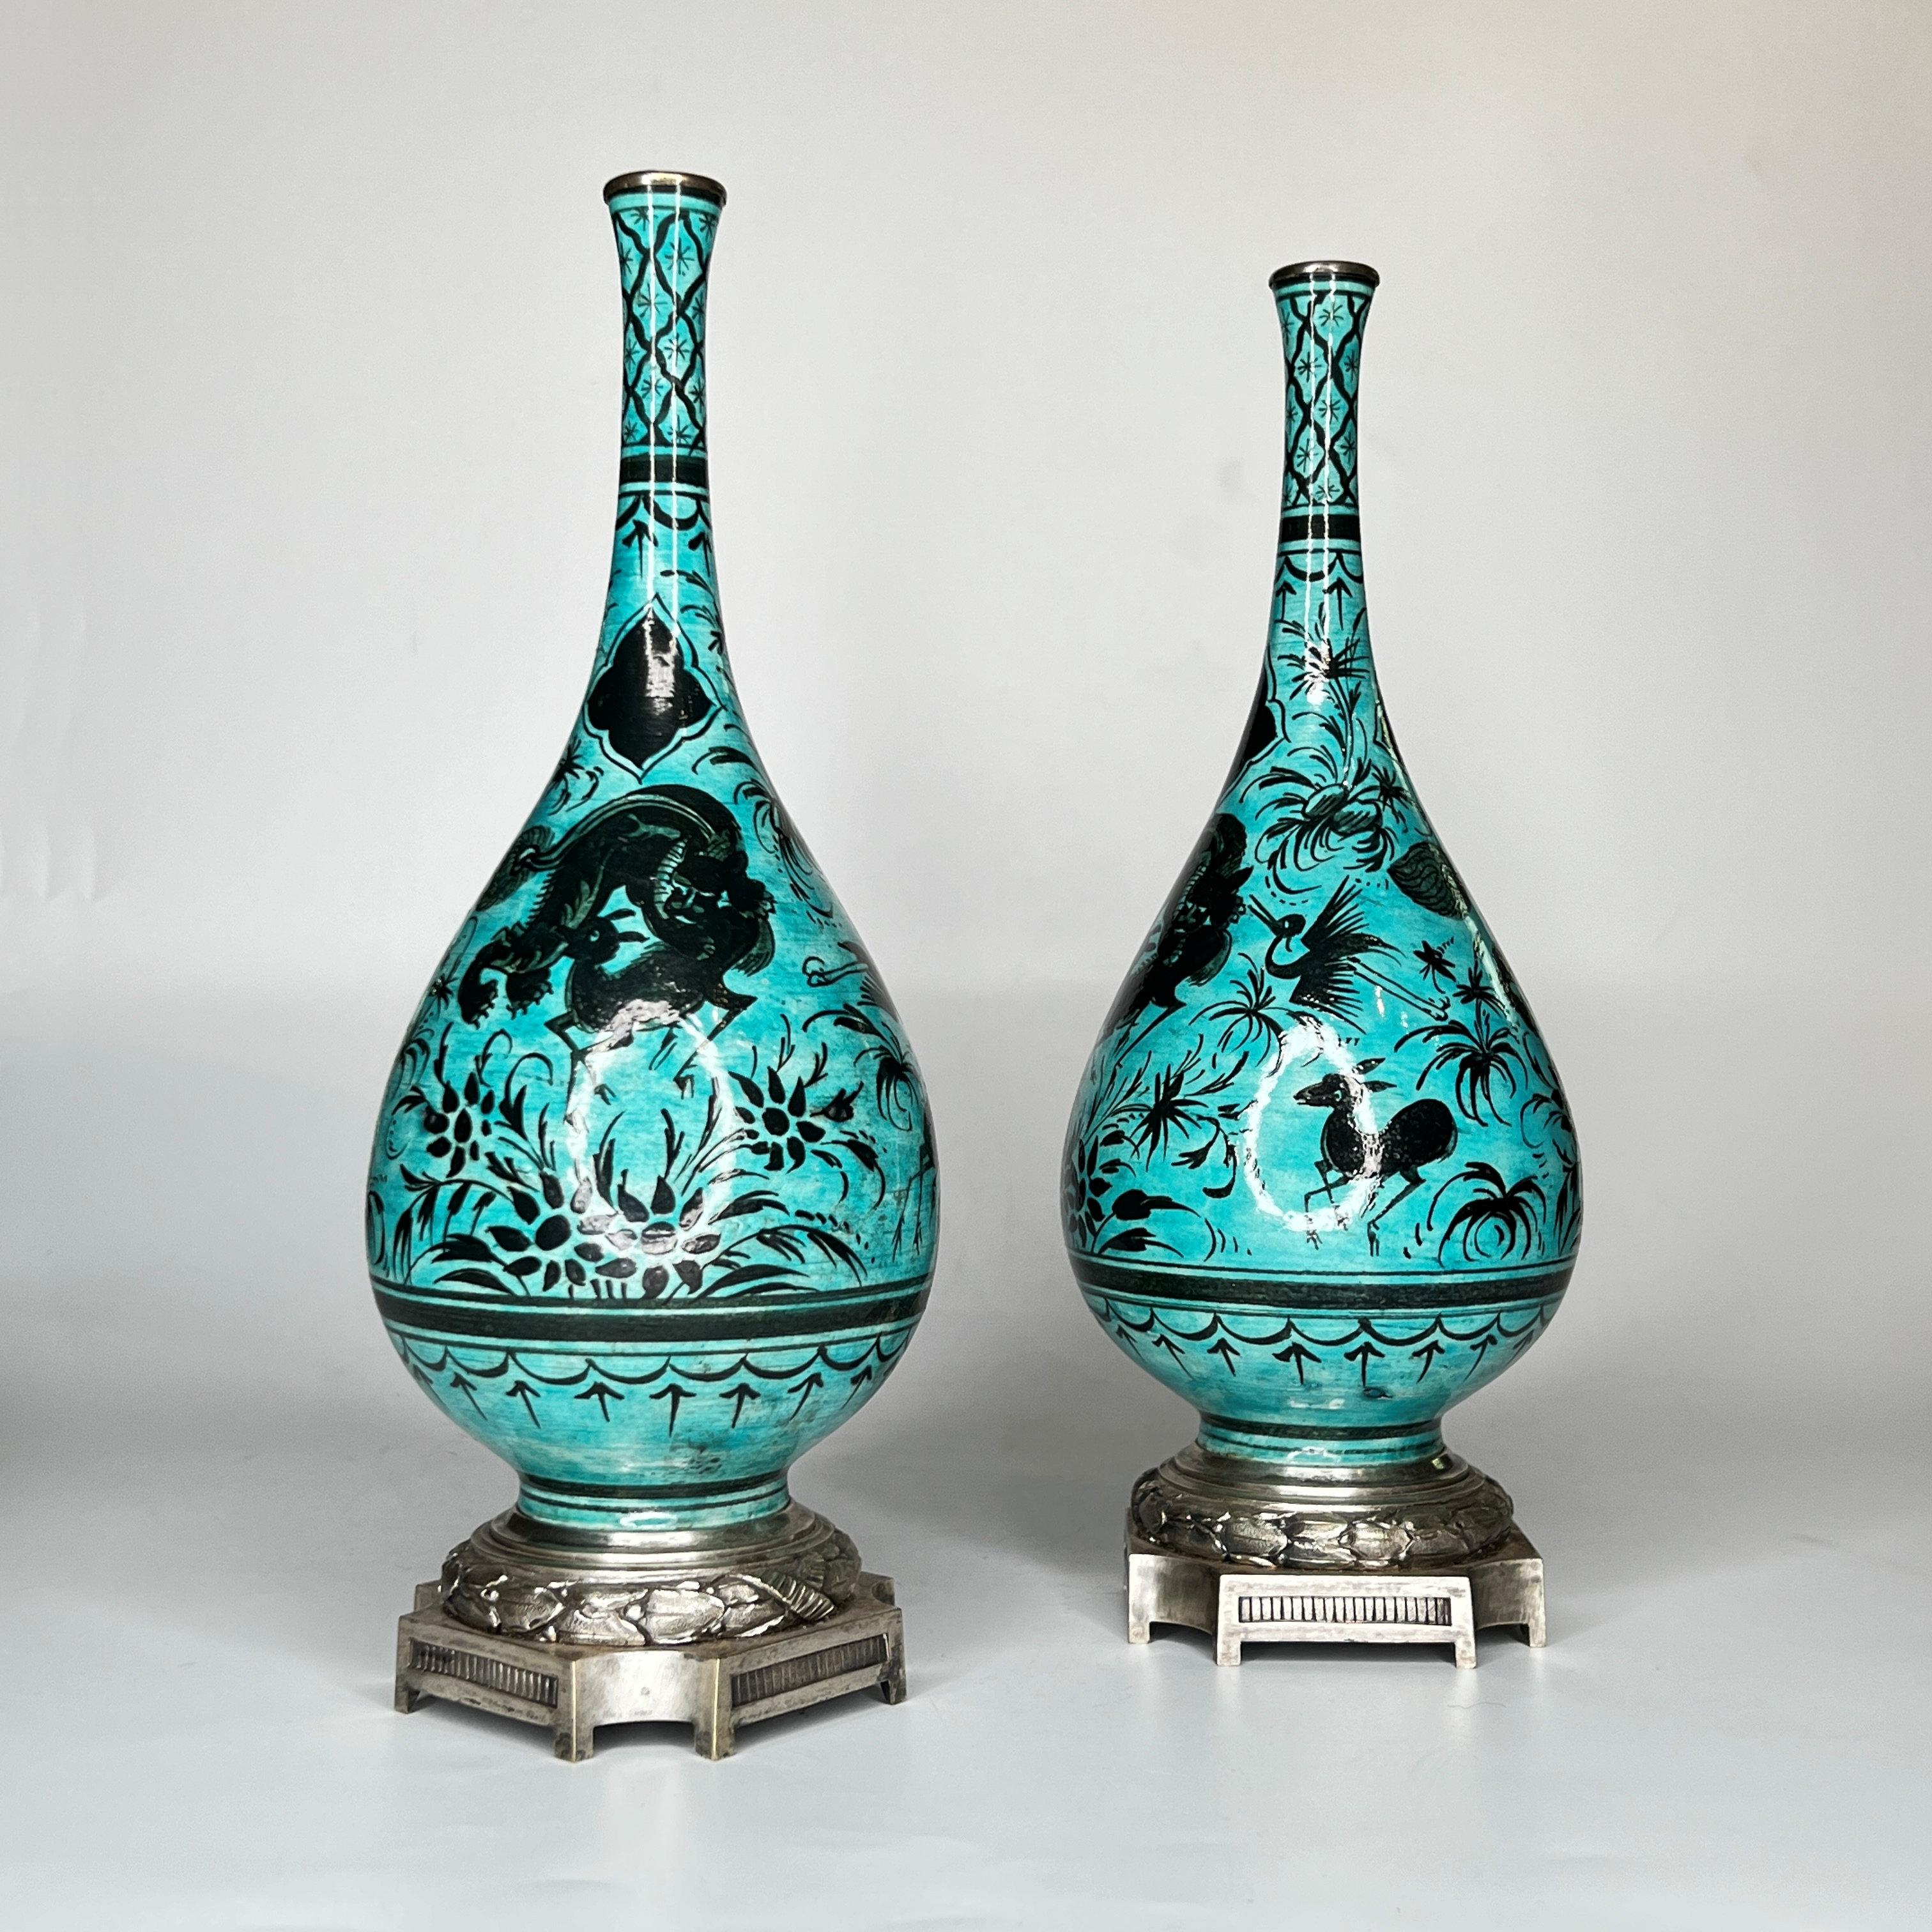 Glazed Persian Ware Ceramic Bottle Vases Attributed to Samson et Cie For Sale